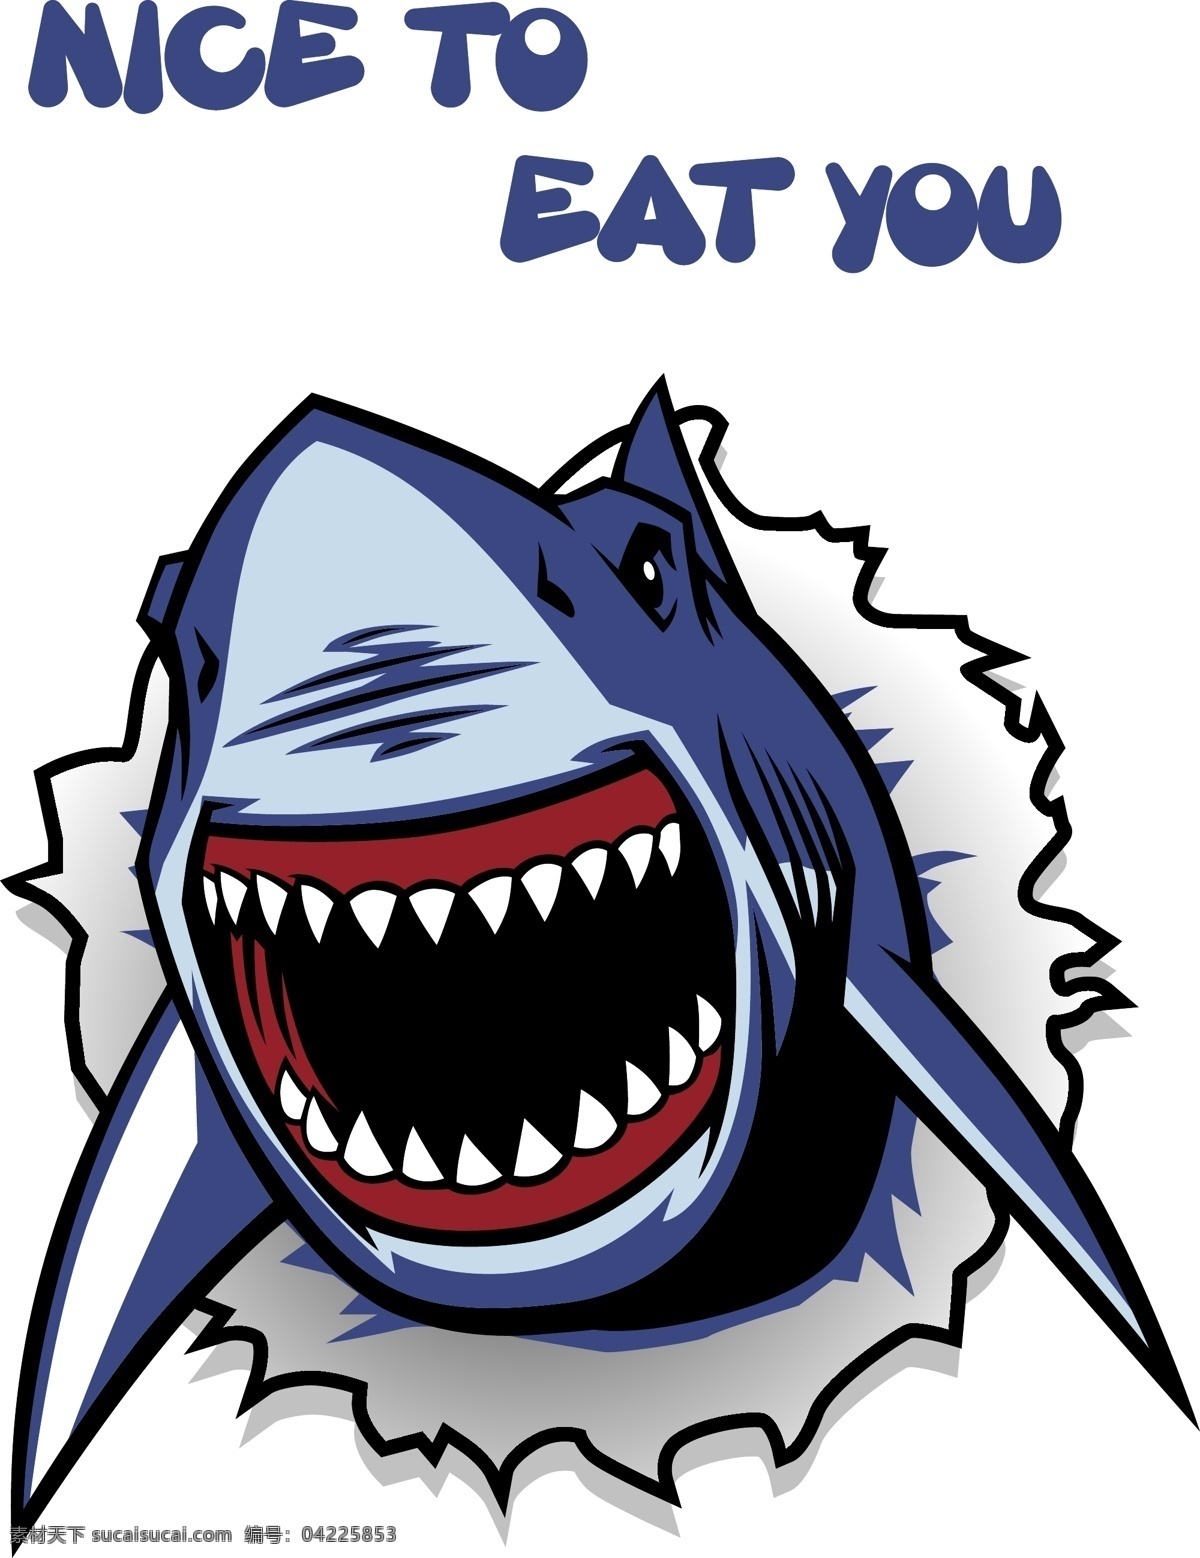 鲨鱼 卡通 海报 插画 nice to eat you